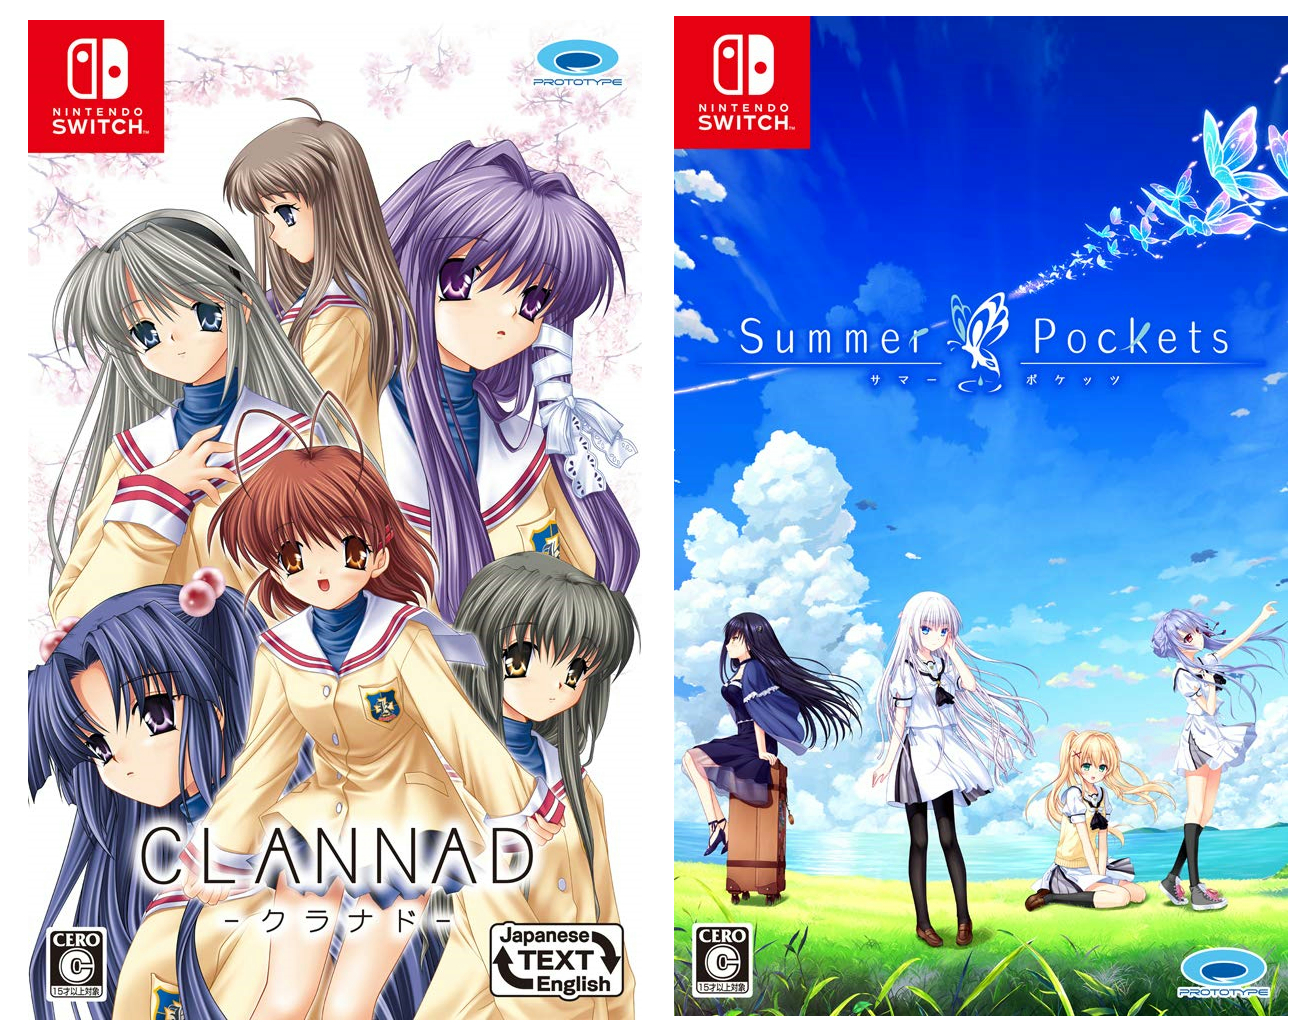 Switch版 Clannad のパッケージ版 初回生産分の全数出荷が完了 Summer Pocket についても追加出荷が決定